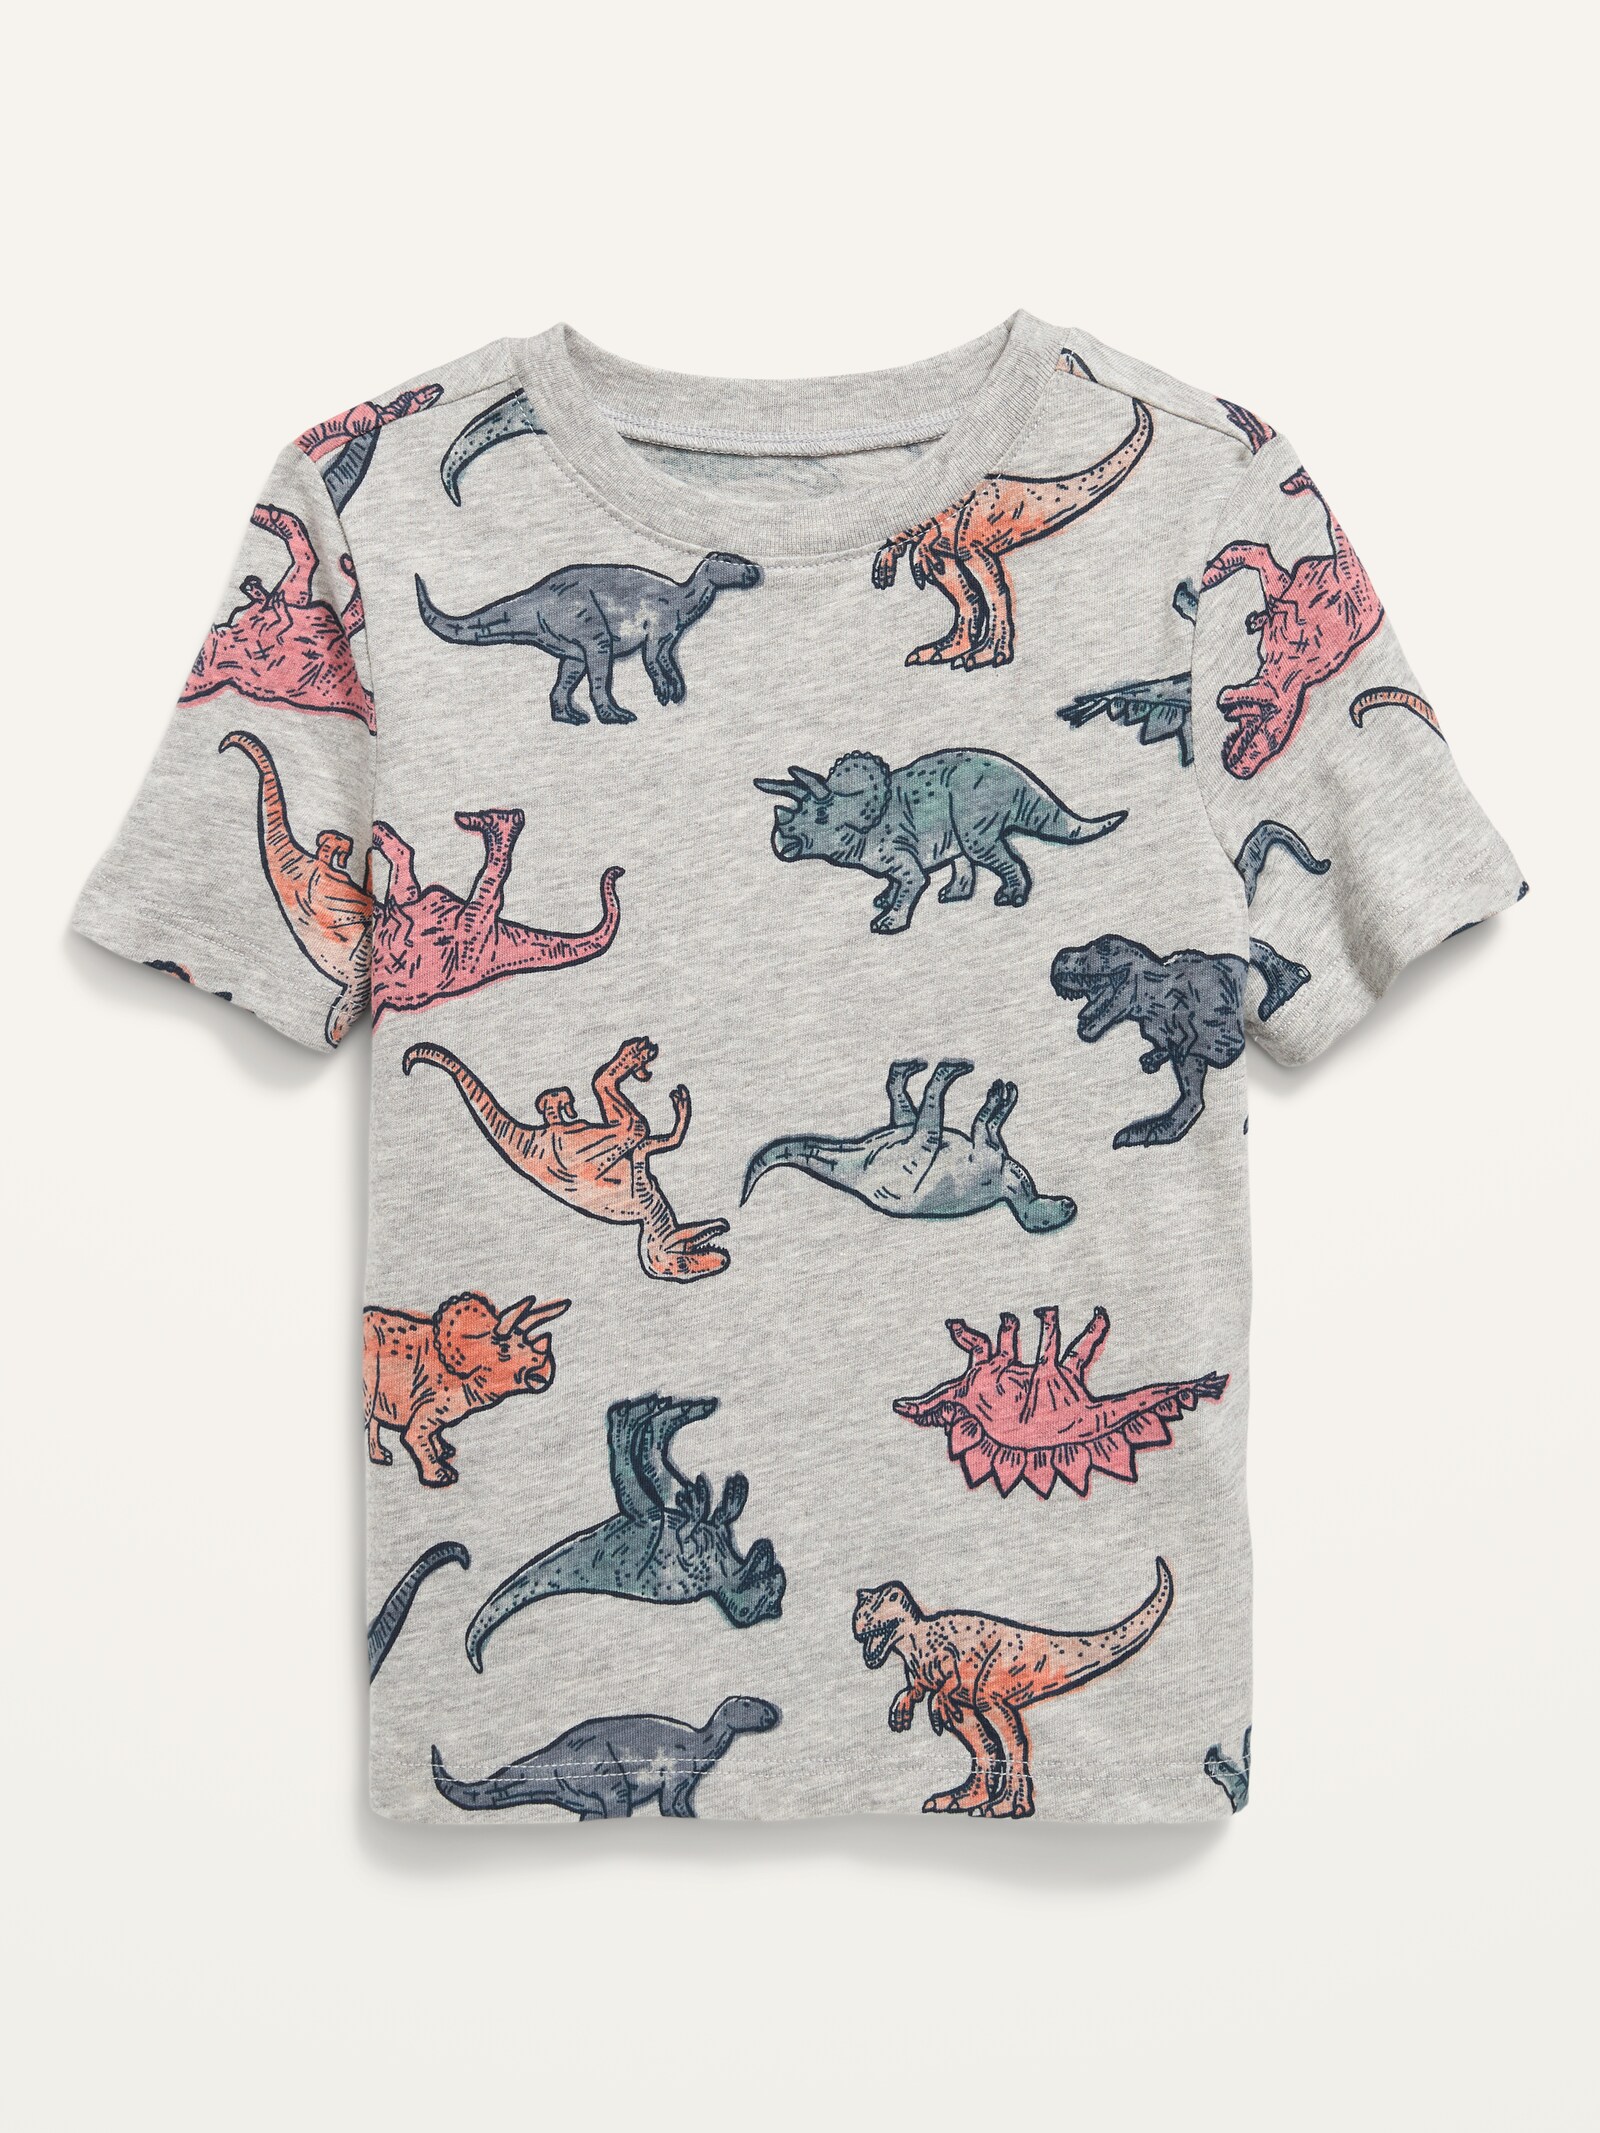 Old Navy Toddler Girl Boy ~ Dinosaur ~ T-Shirt Size 12-18 month 3T 18-24M 2T 